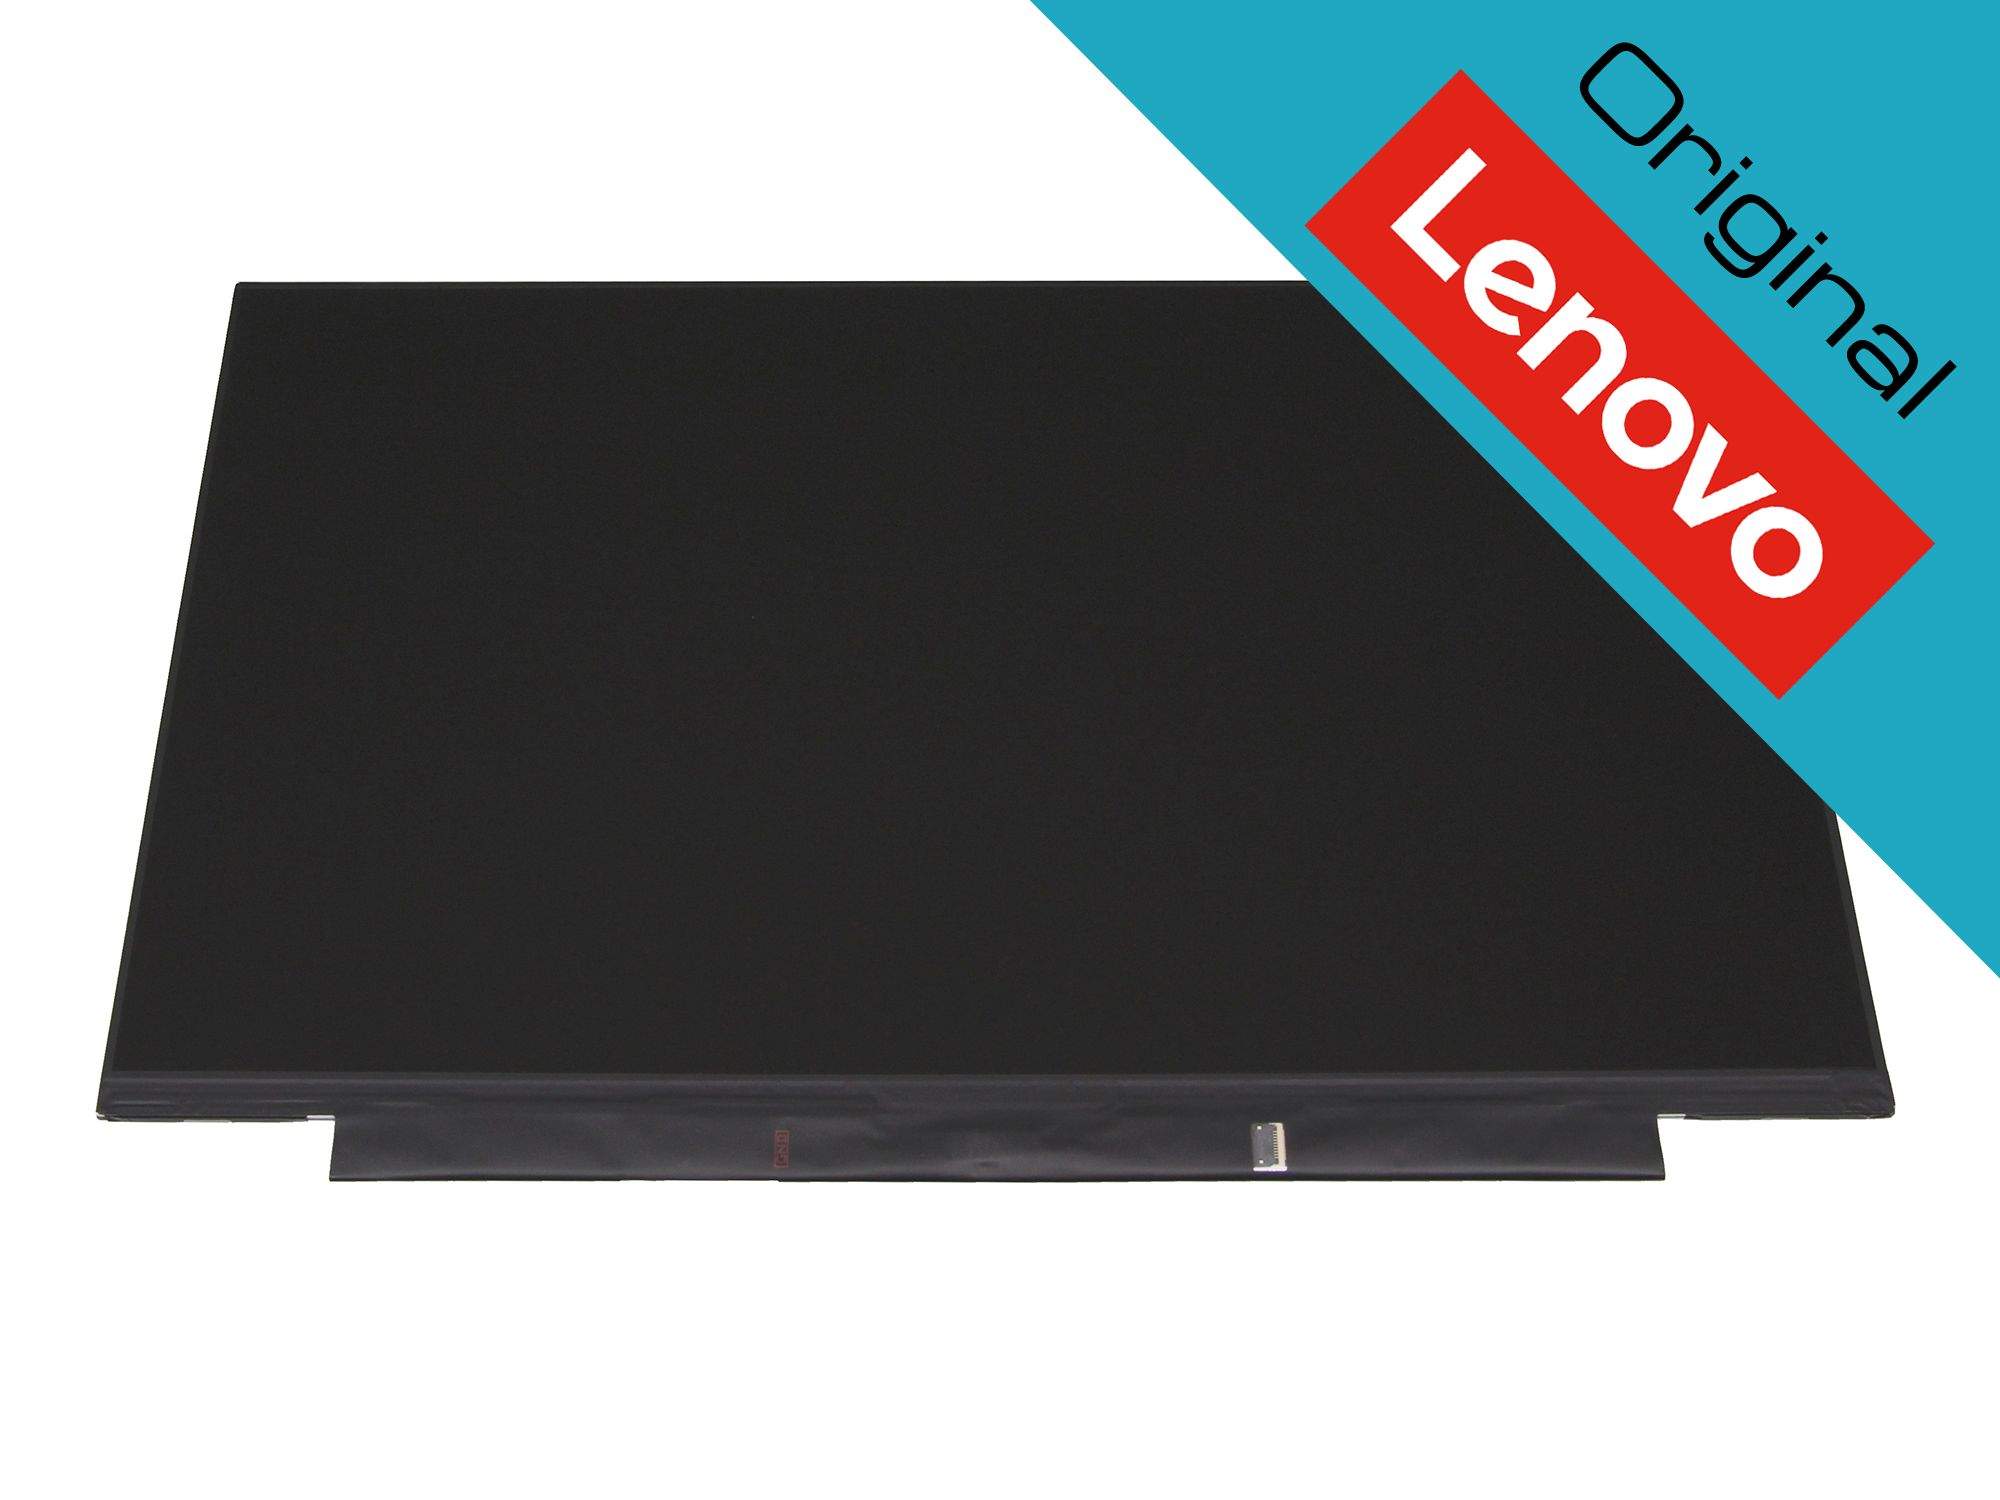 LENOVO LCD 13.3 FHD IPS LCLW 300nit (02DA370)